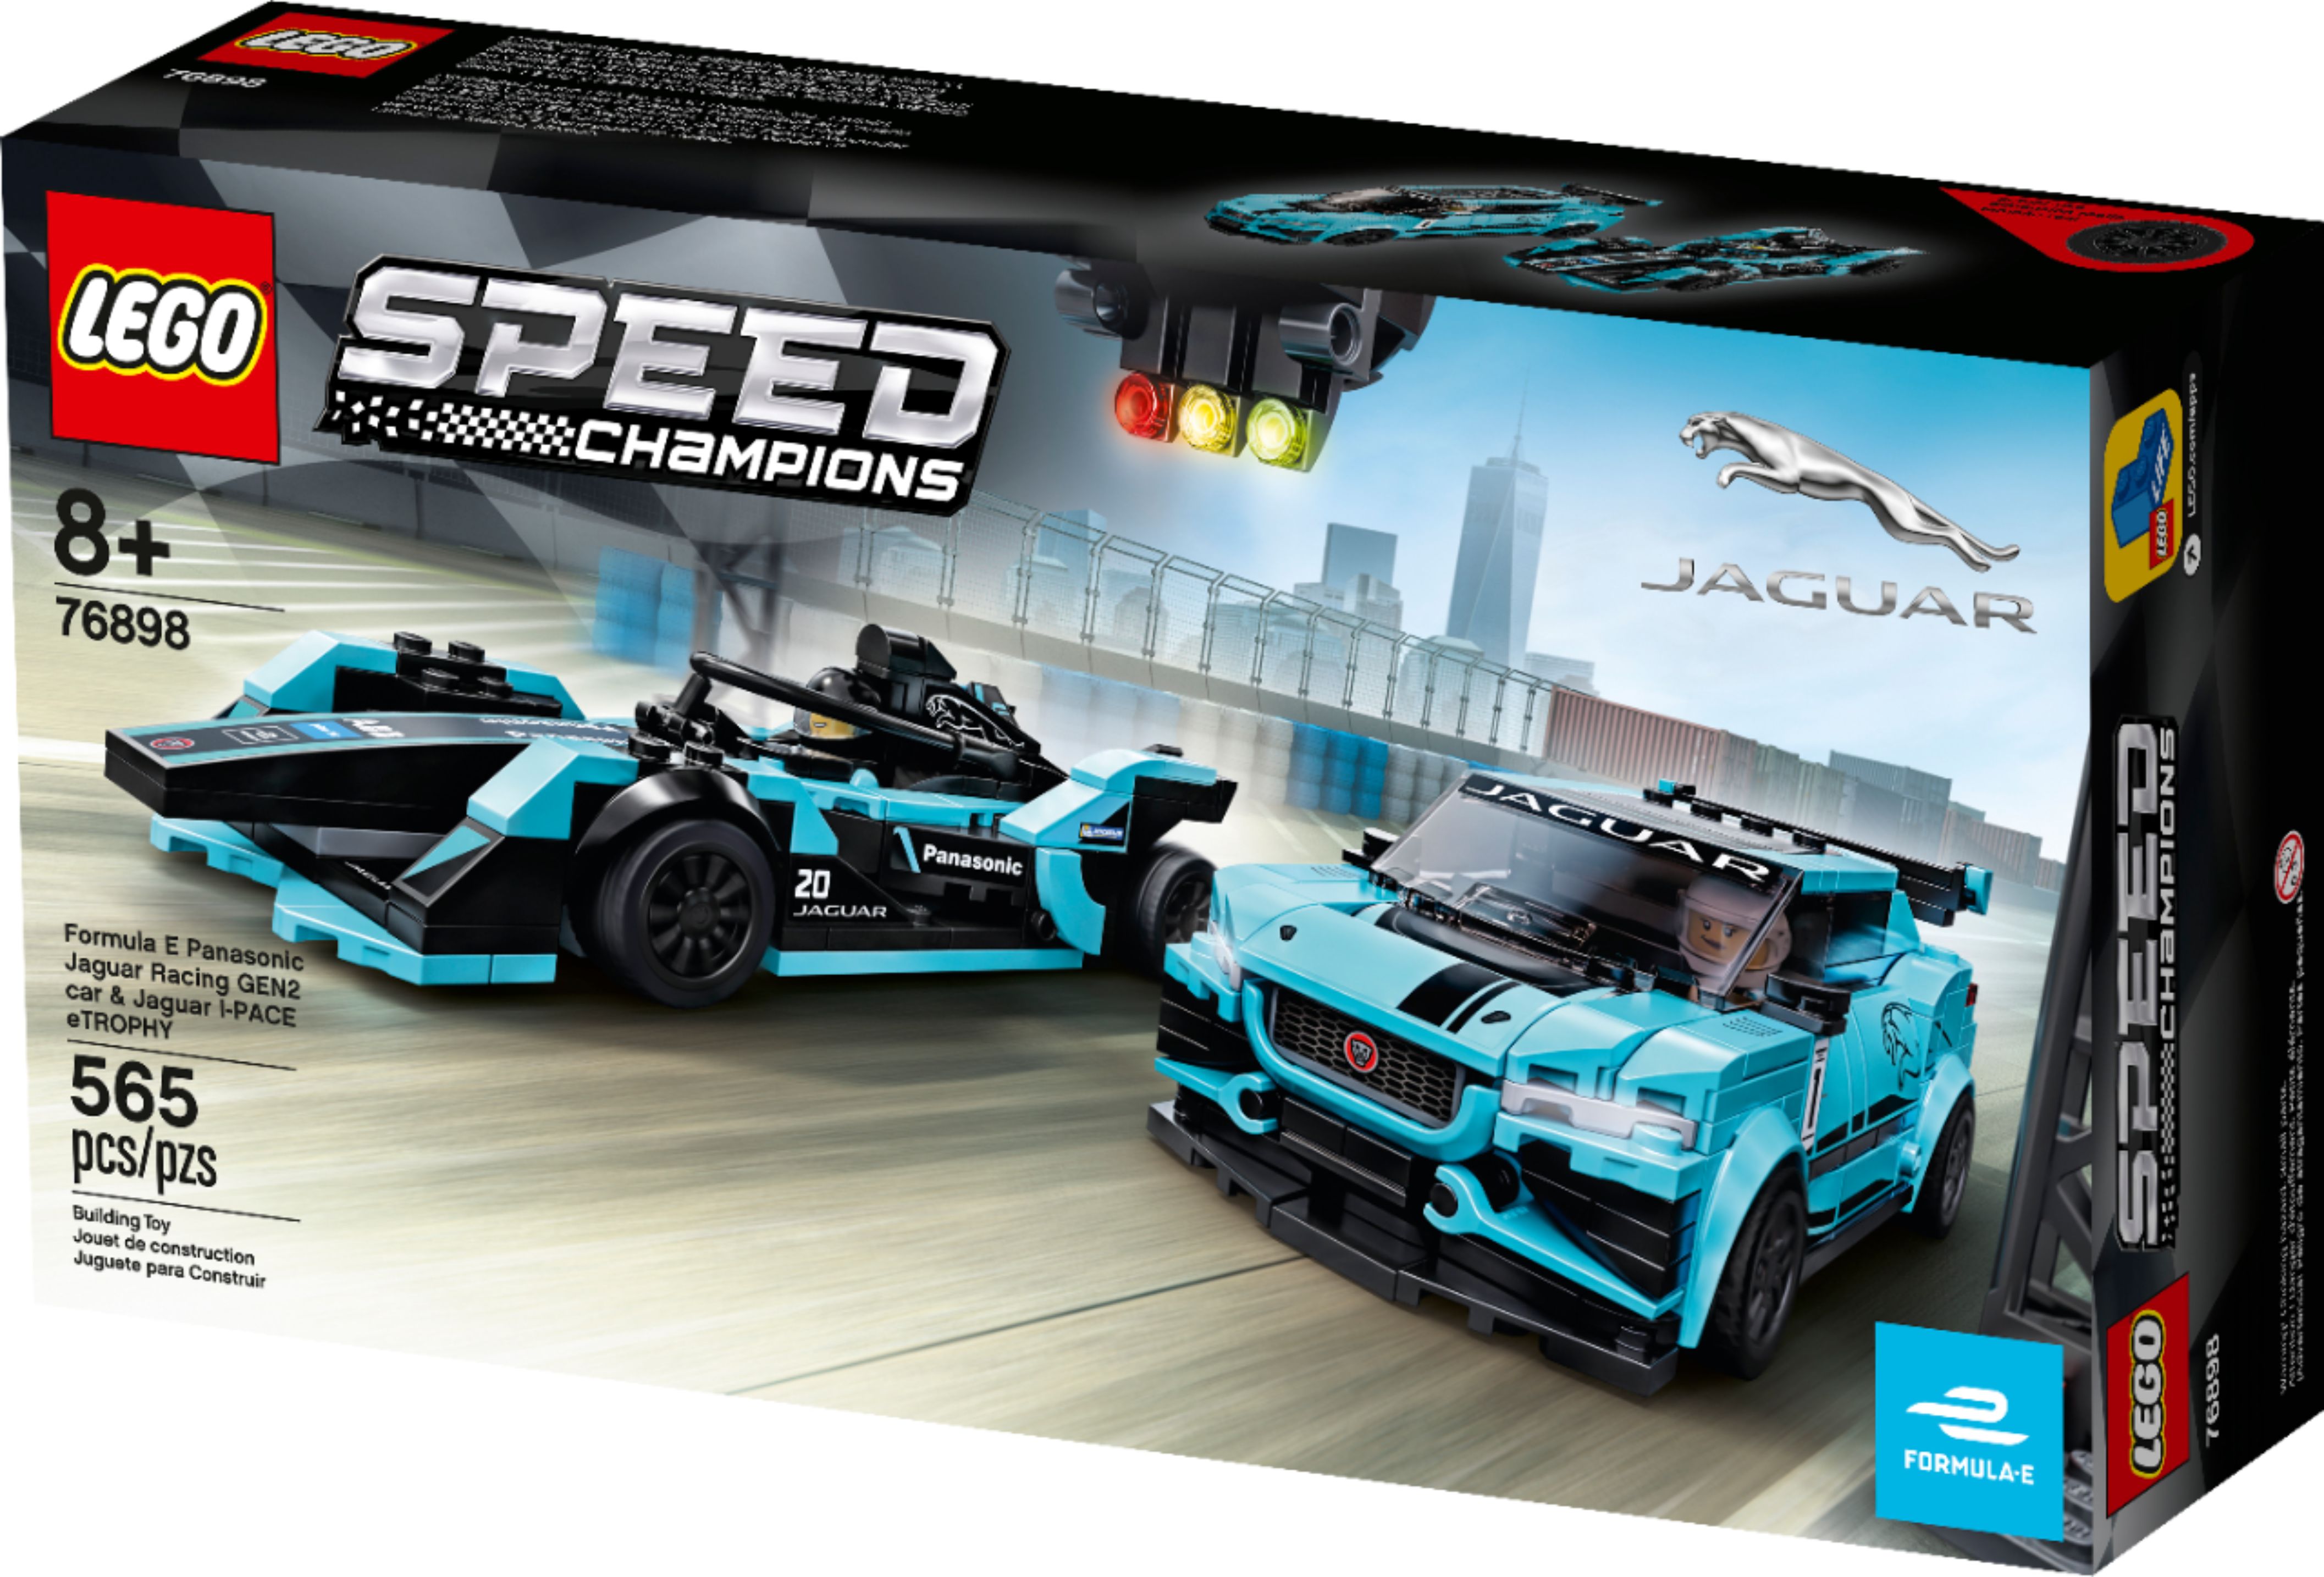 LEGO ® Speed Formula E Panasonic Jaguar Racing GEN2 car and I-PACE eTROPHY 76898 